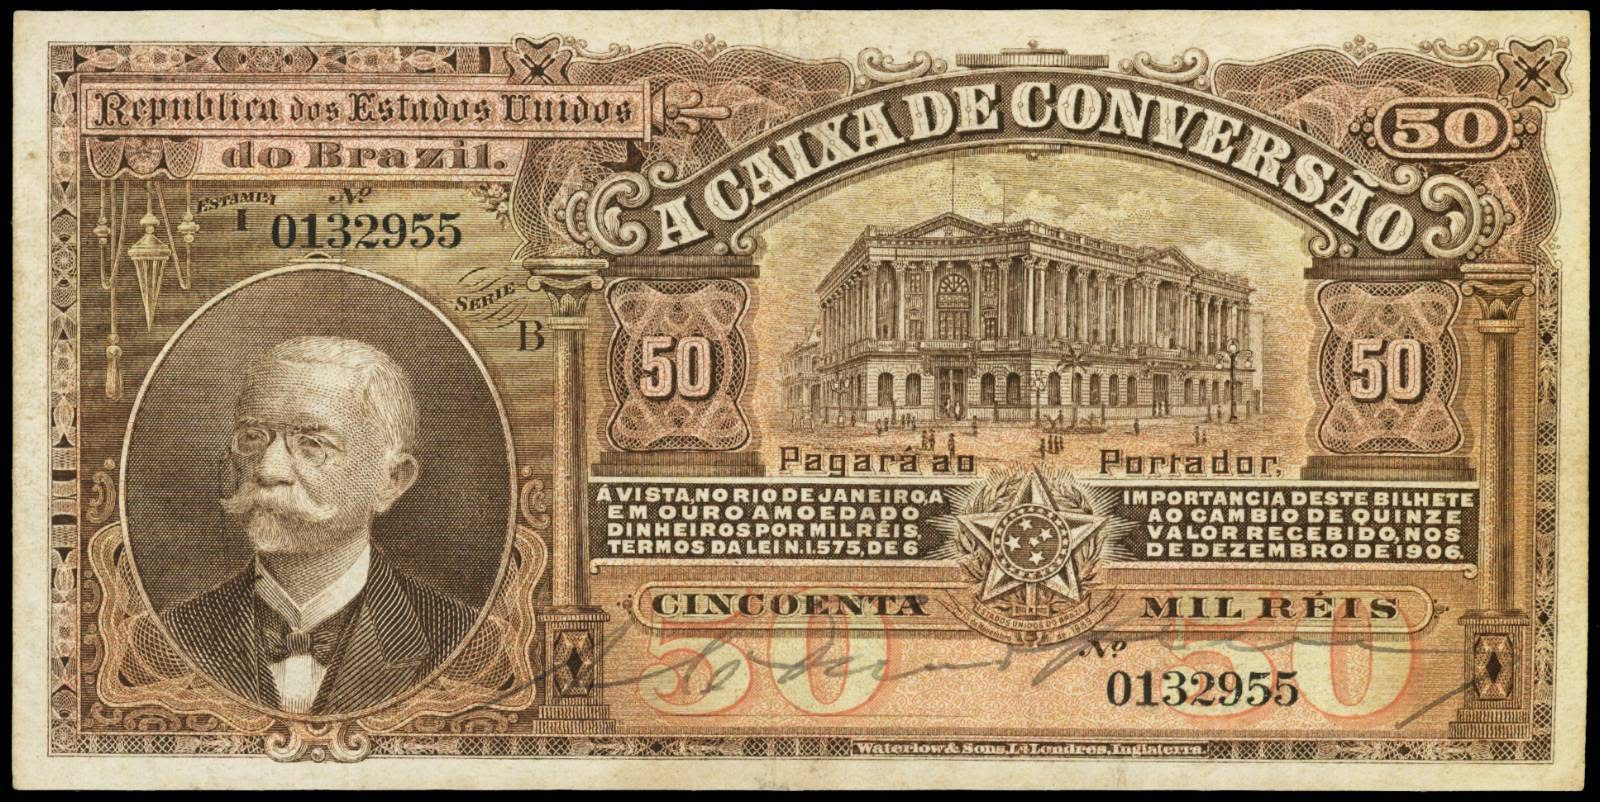 Brazil banknotes 50 Mil Reis Caixa de Conversao